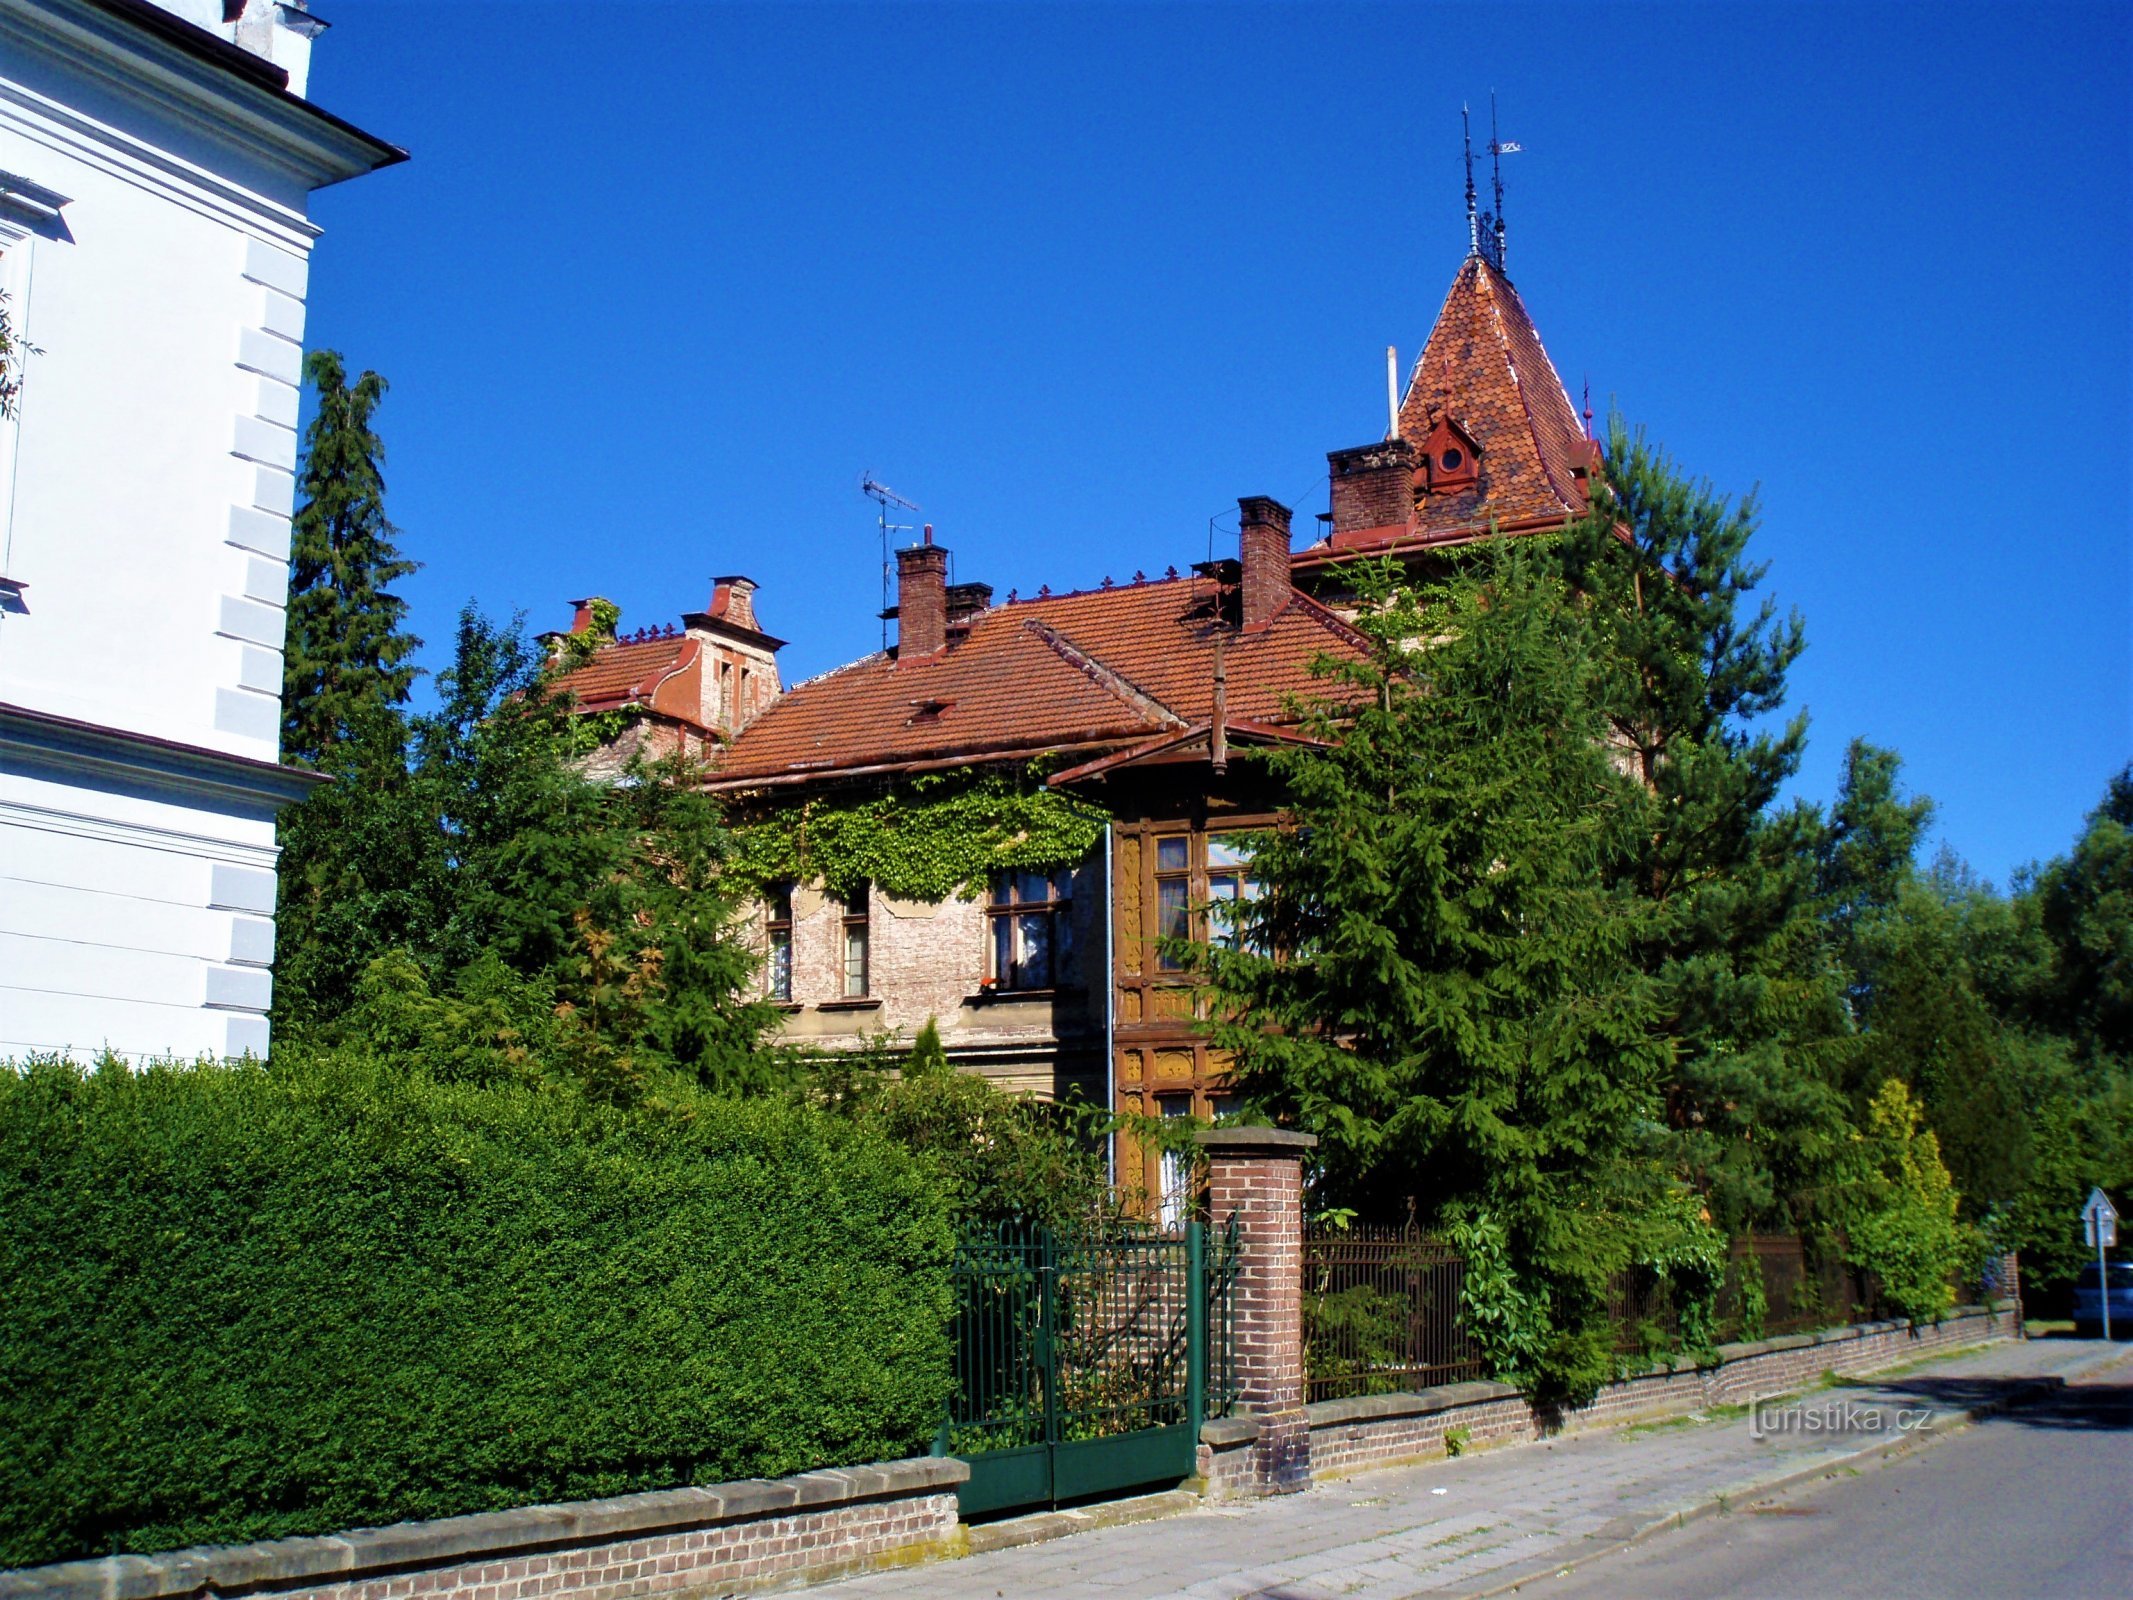 Wipler's villa (Orlické nábřeží no. 376, Hradec Králové, 27.6.2010/XNUMX/XNUMX)